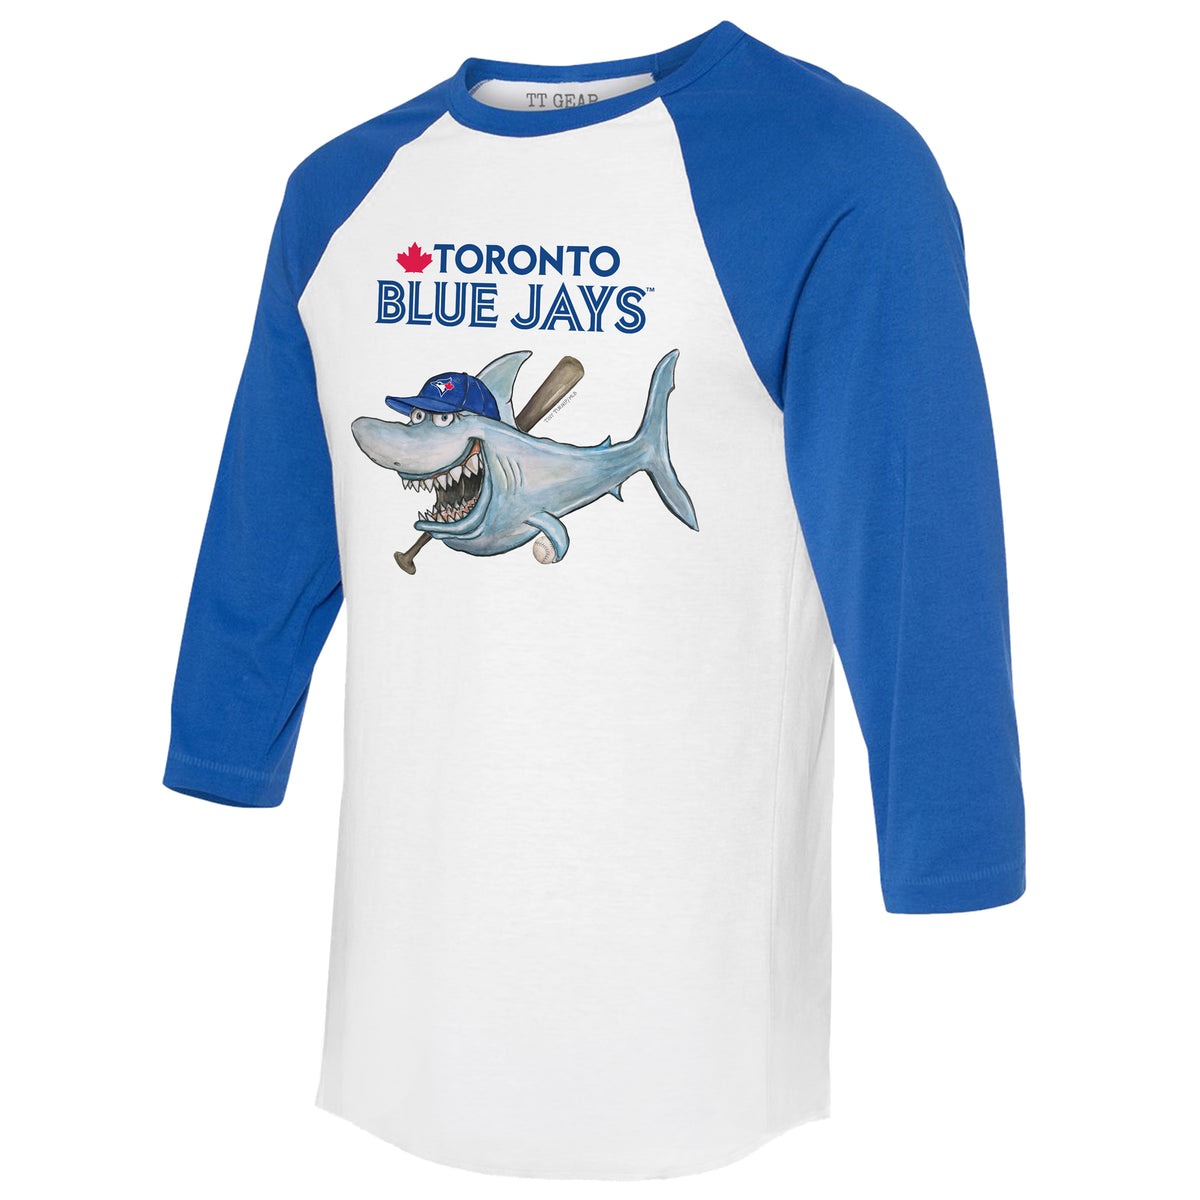 Toronto Blue Jays Shark 3/4 Royal Blue Sleeve Raglan